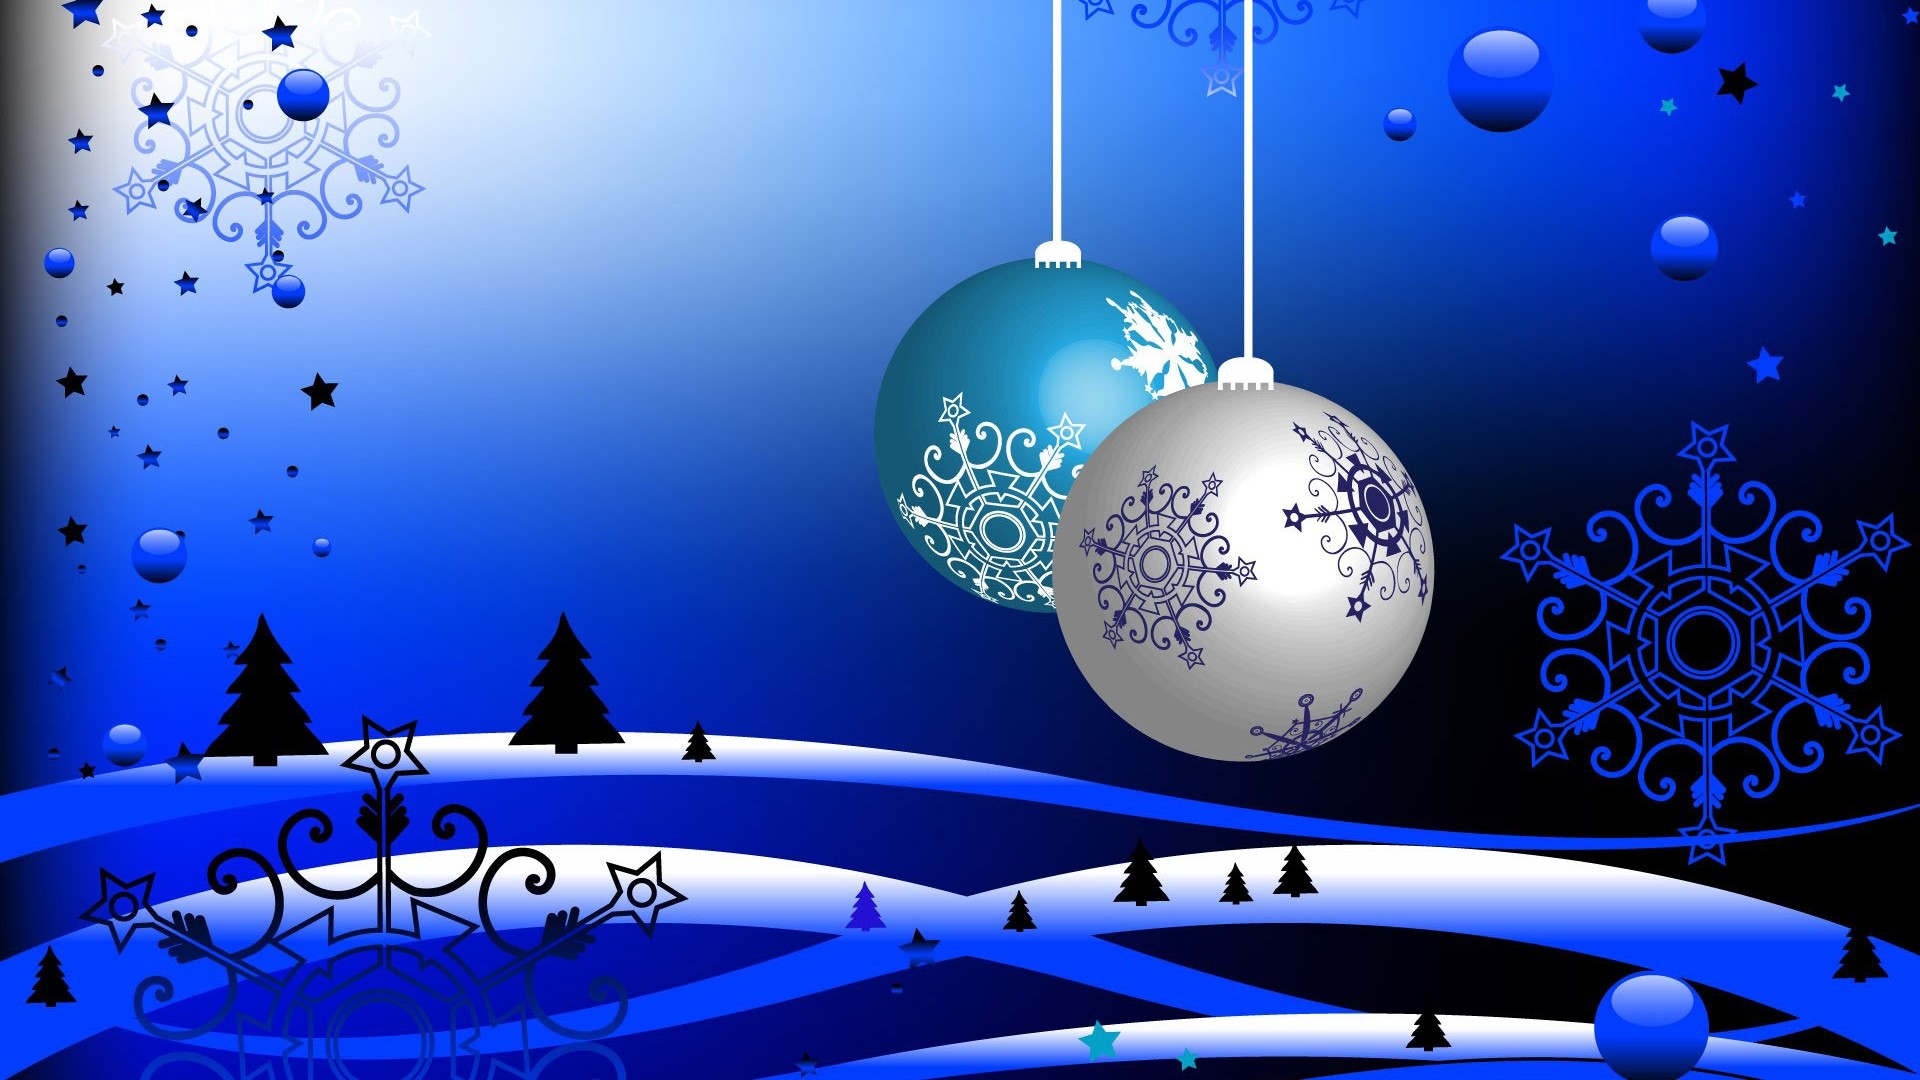 Animated Christmas Wallpaper Background Image